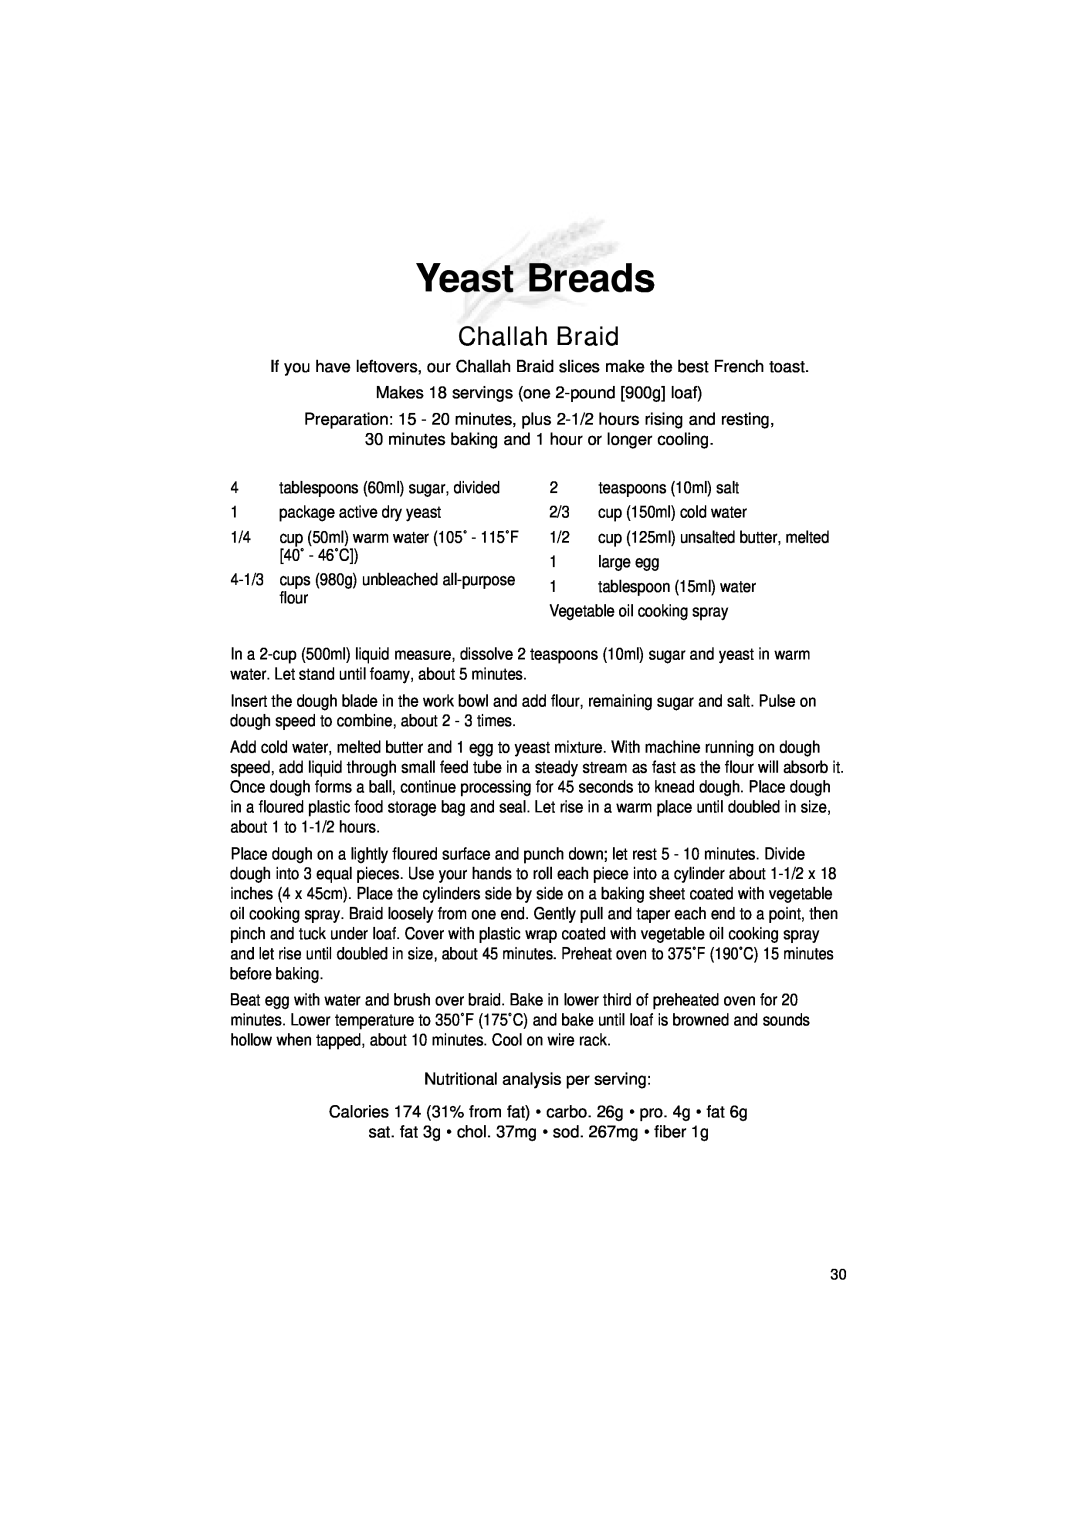 Cuisinart DLC-2011C manual Yeast Breads, Challah Braid 